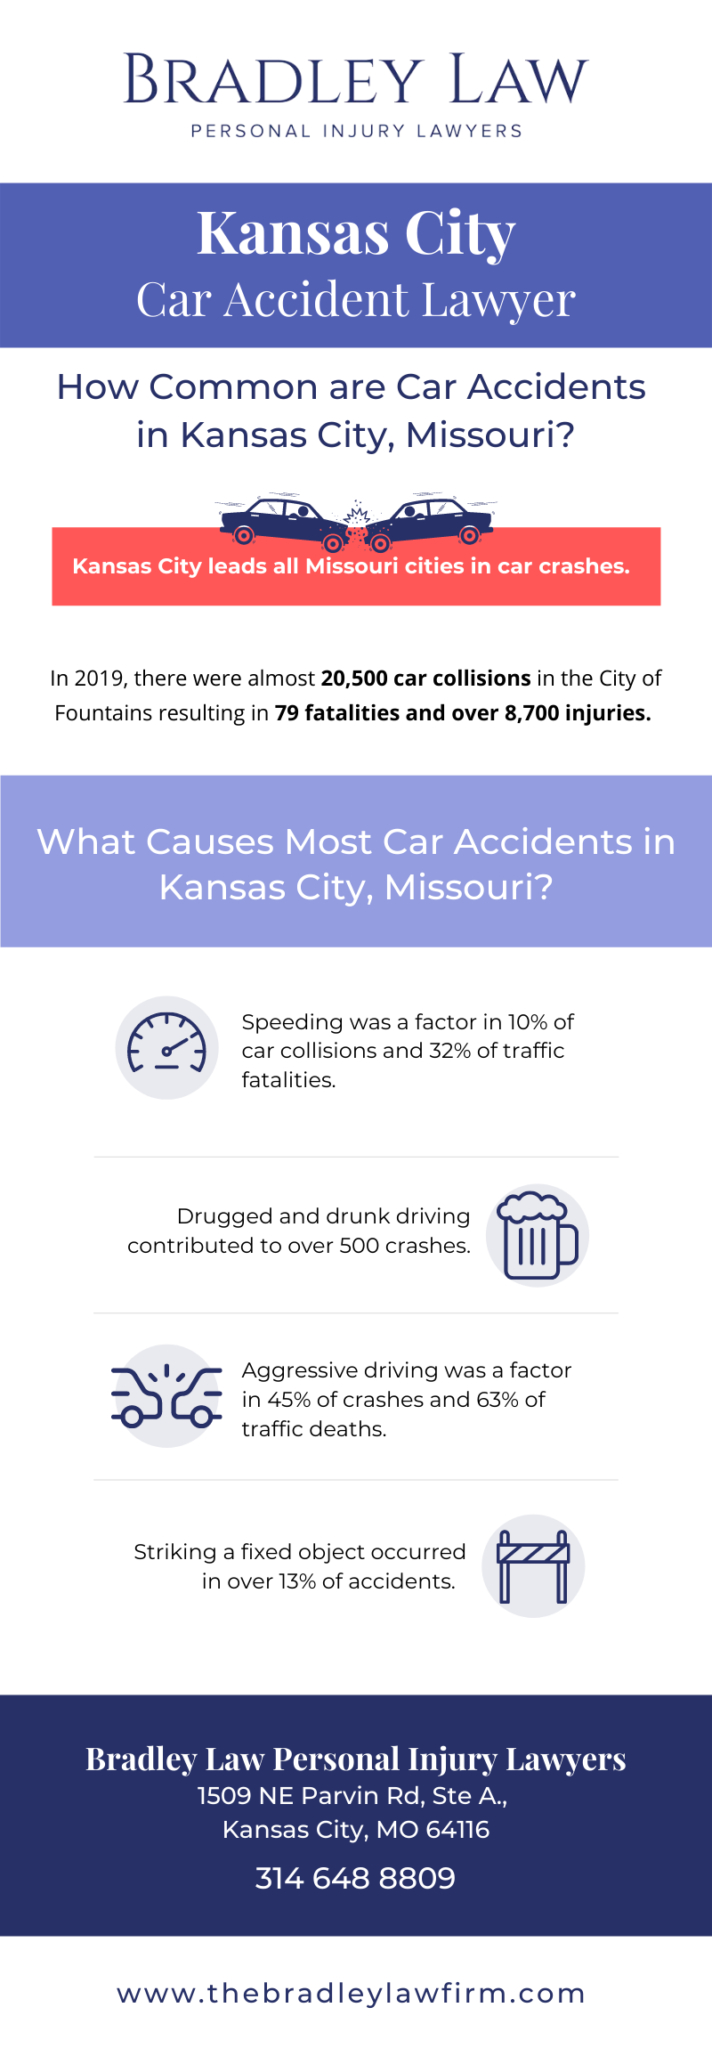 Kansas City Car Accident Lawyer Near You